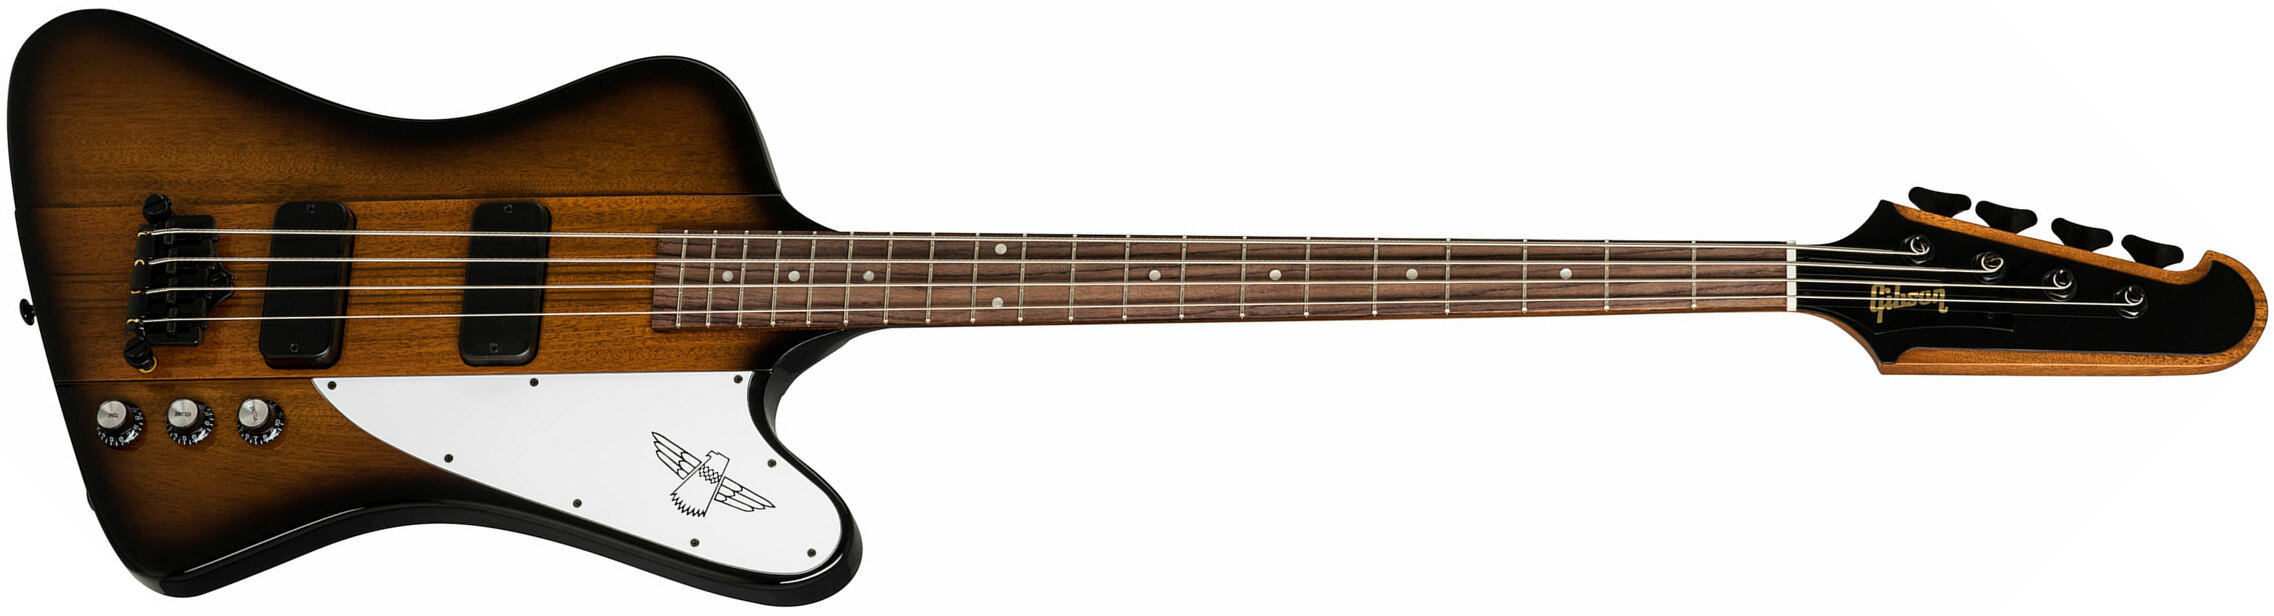 Gibson Thunderbird Bass 2019 - Vintage Sunburst - Bajo eléctrico de cuerpo sólido - Main picture